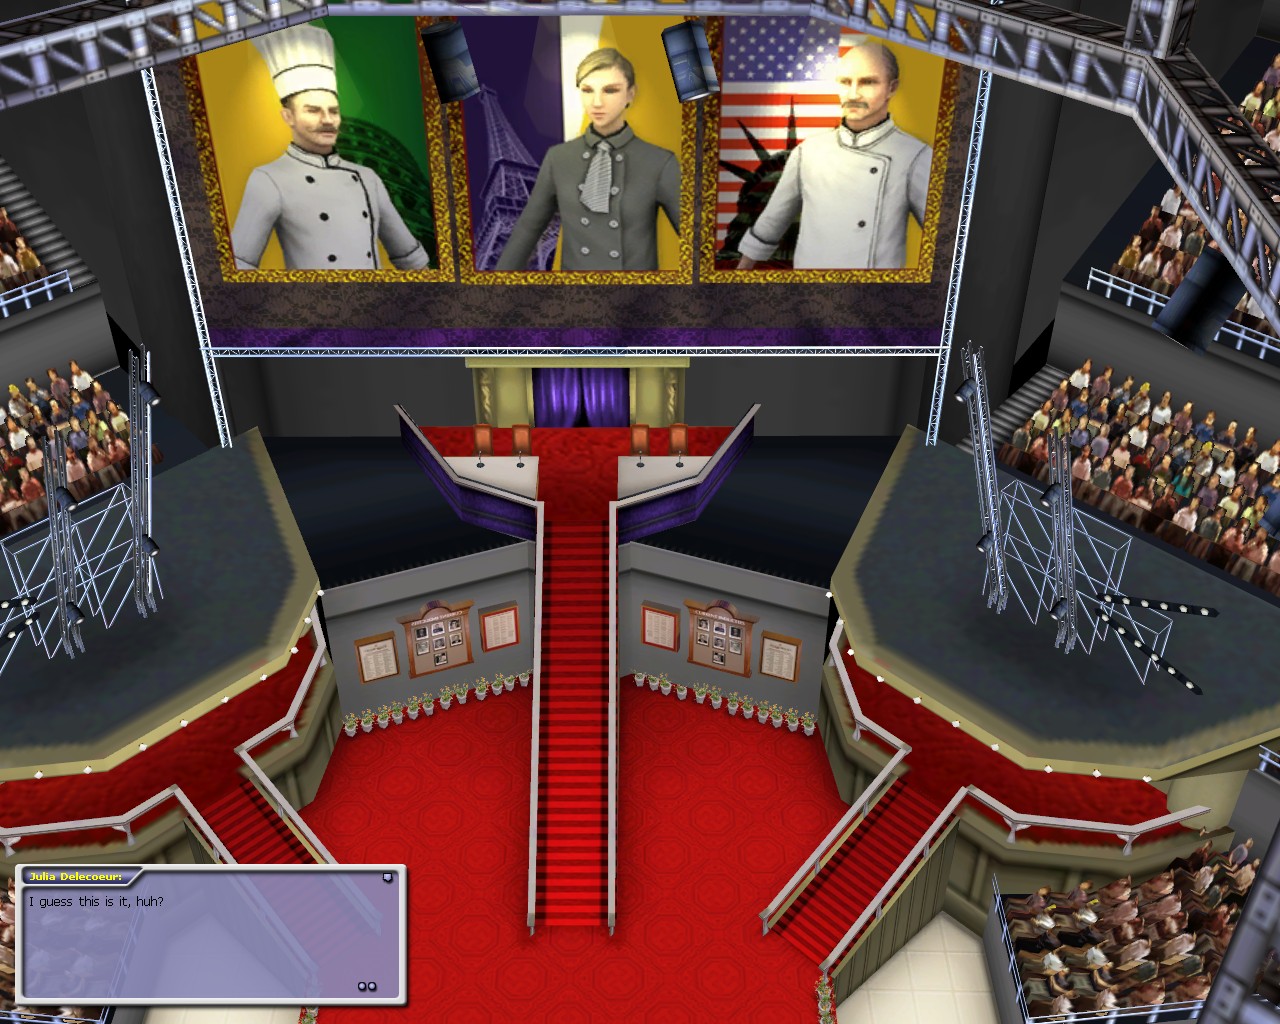 Restaurant Empire II screenshot